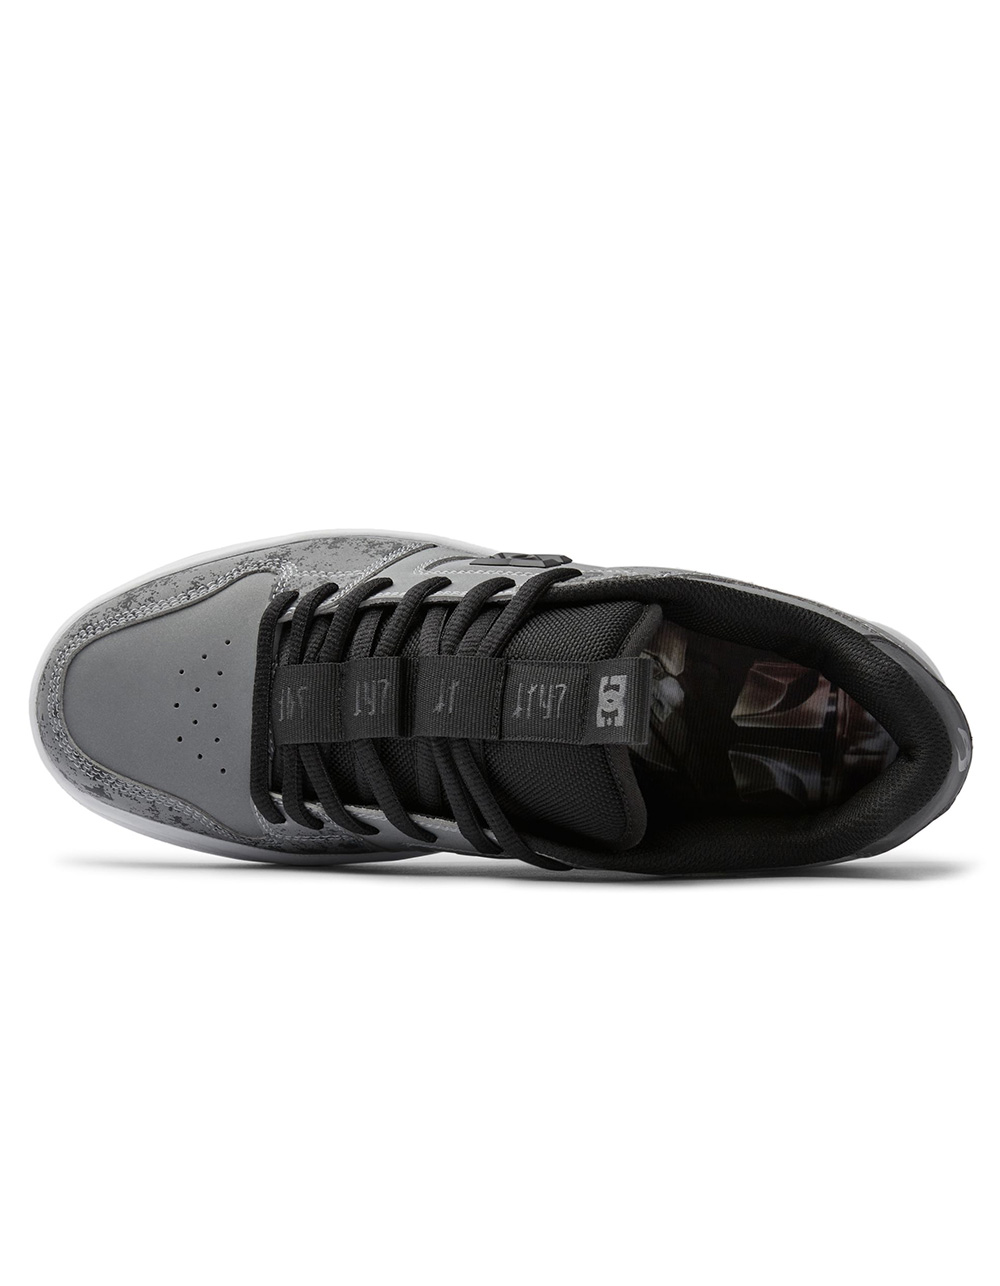 Manteca S - Leather Skate Shoes for Men